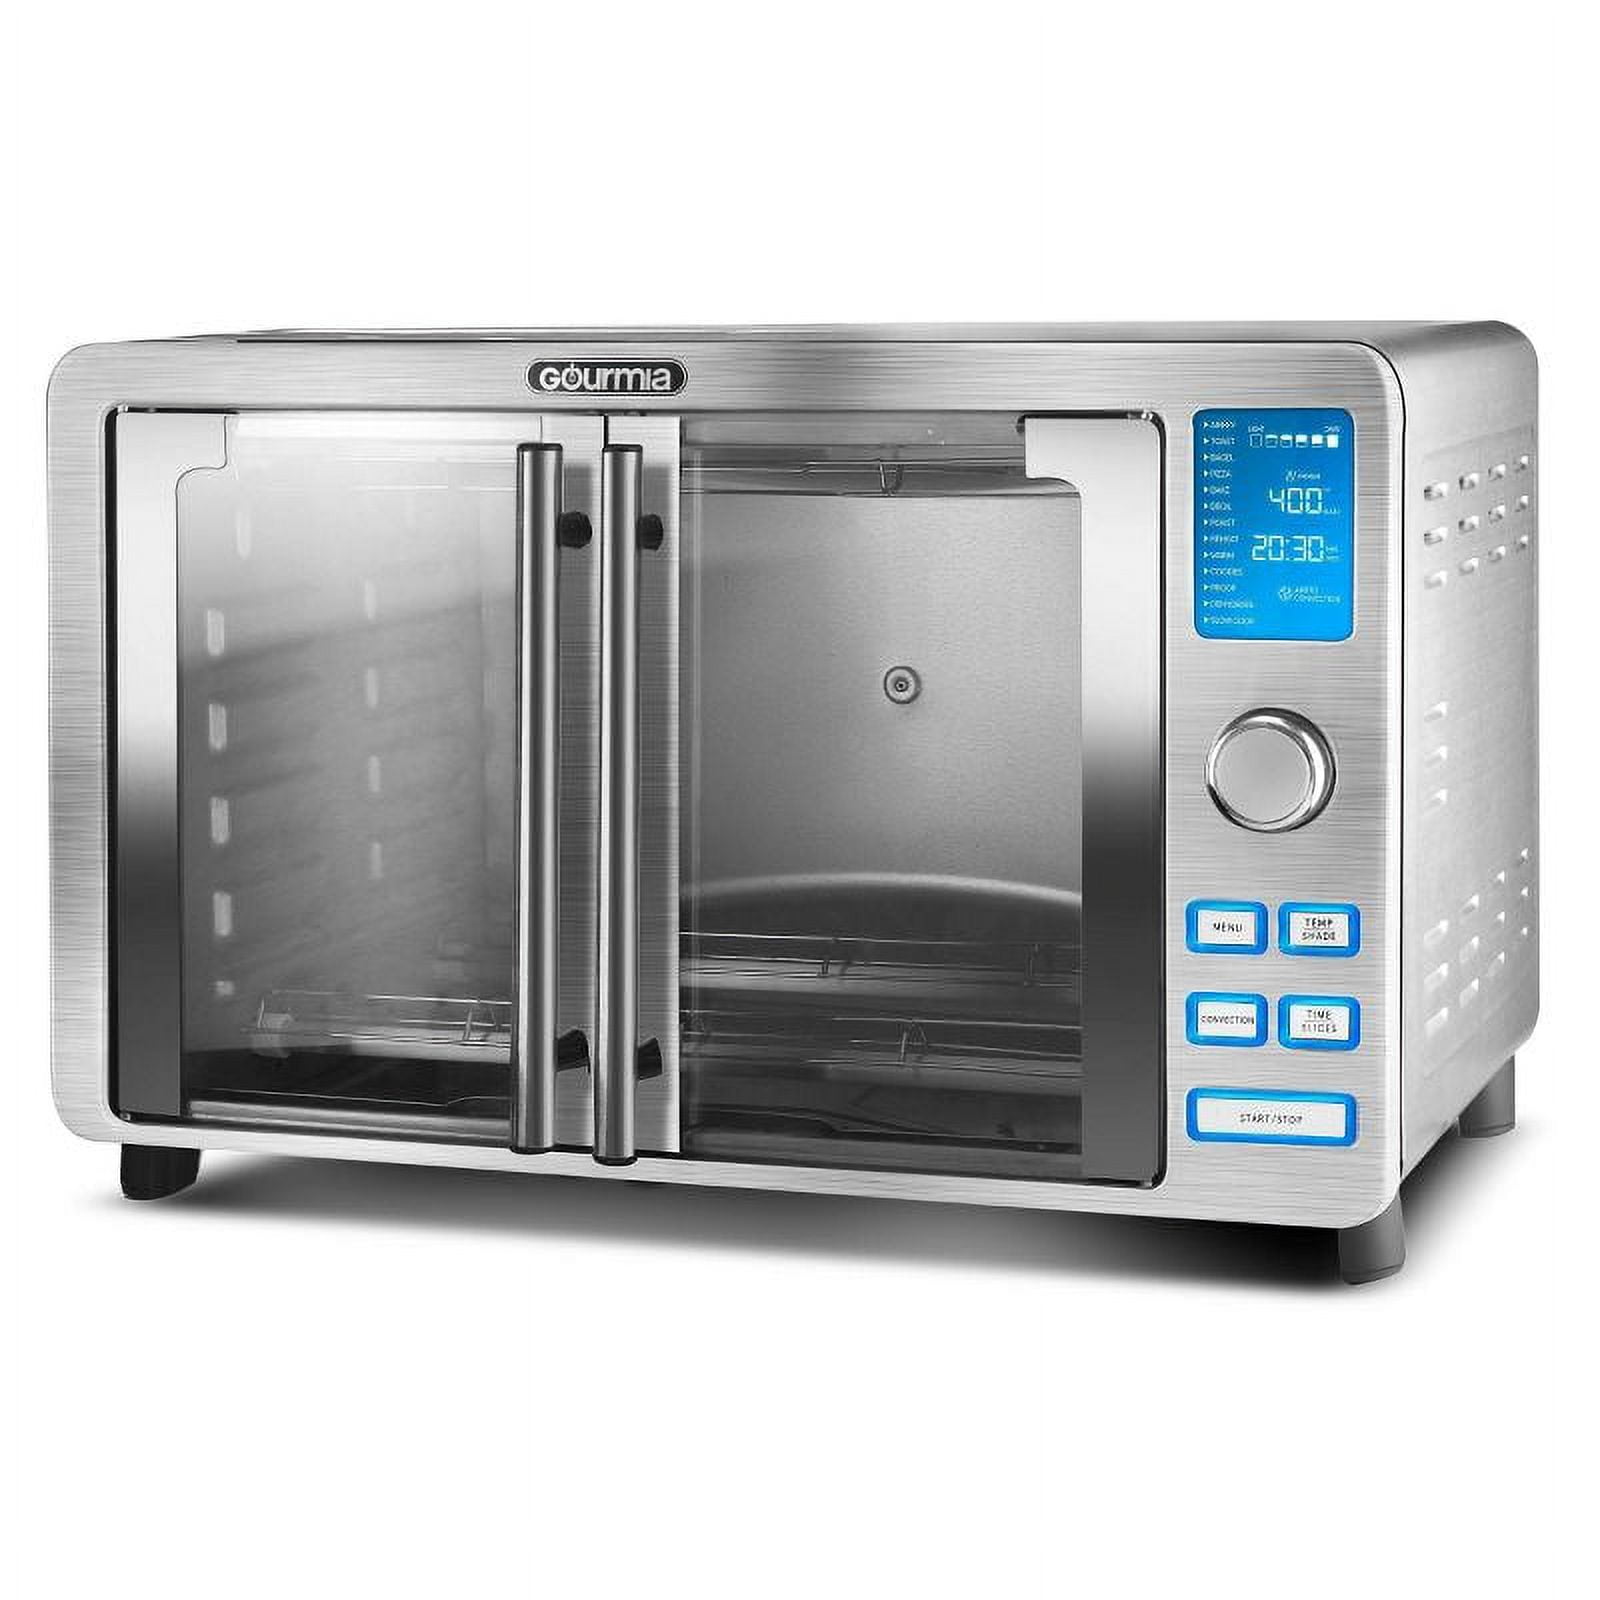 Gourmia French Door XL Digital Air Fryer Oven Review 